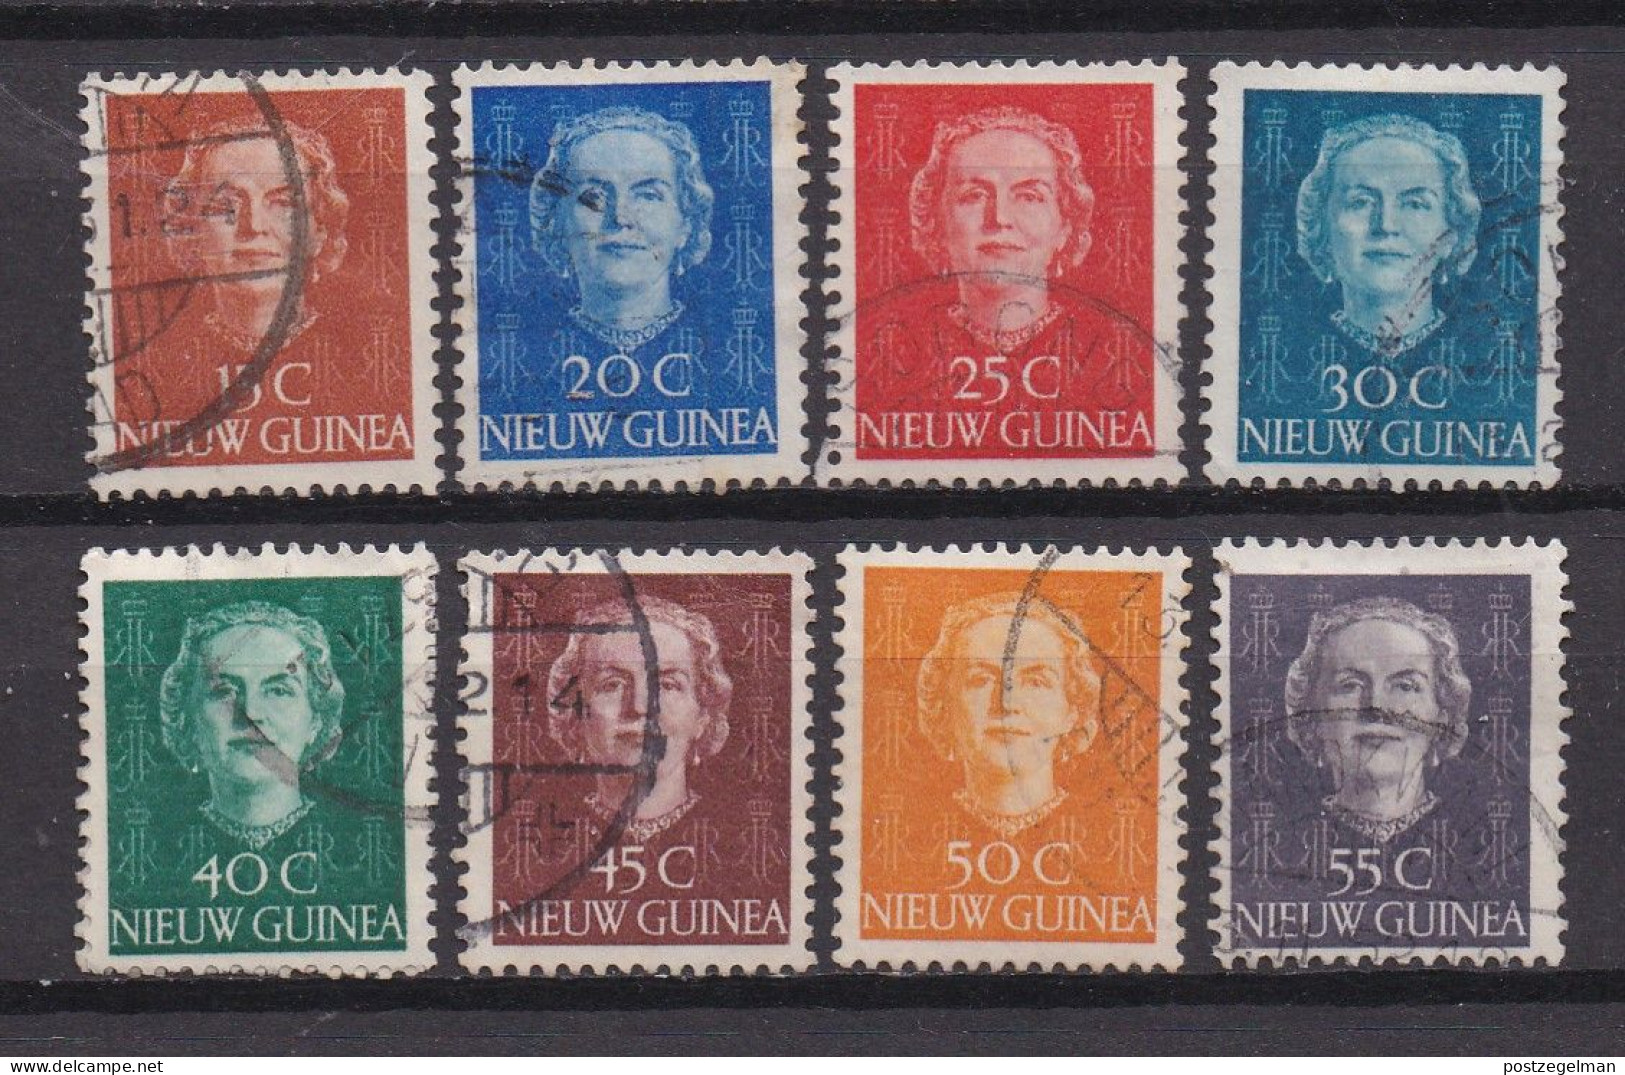 NEDERLAND NW GUINEA, 1950, Used Stamp(s) , Queen Juliana, NVPH Nr(s).  10=18, Scannr. 10542  (8 Values Only) - Nederlands Nieuw-Guinea